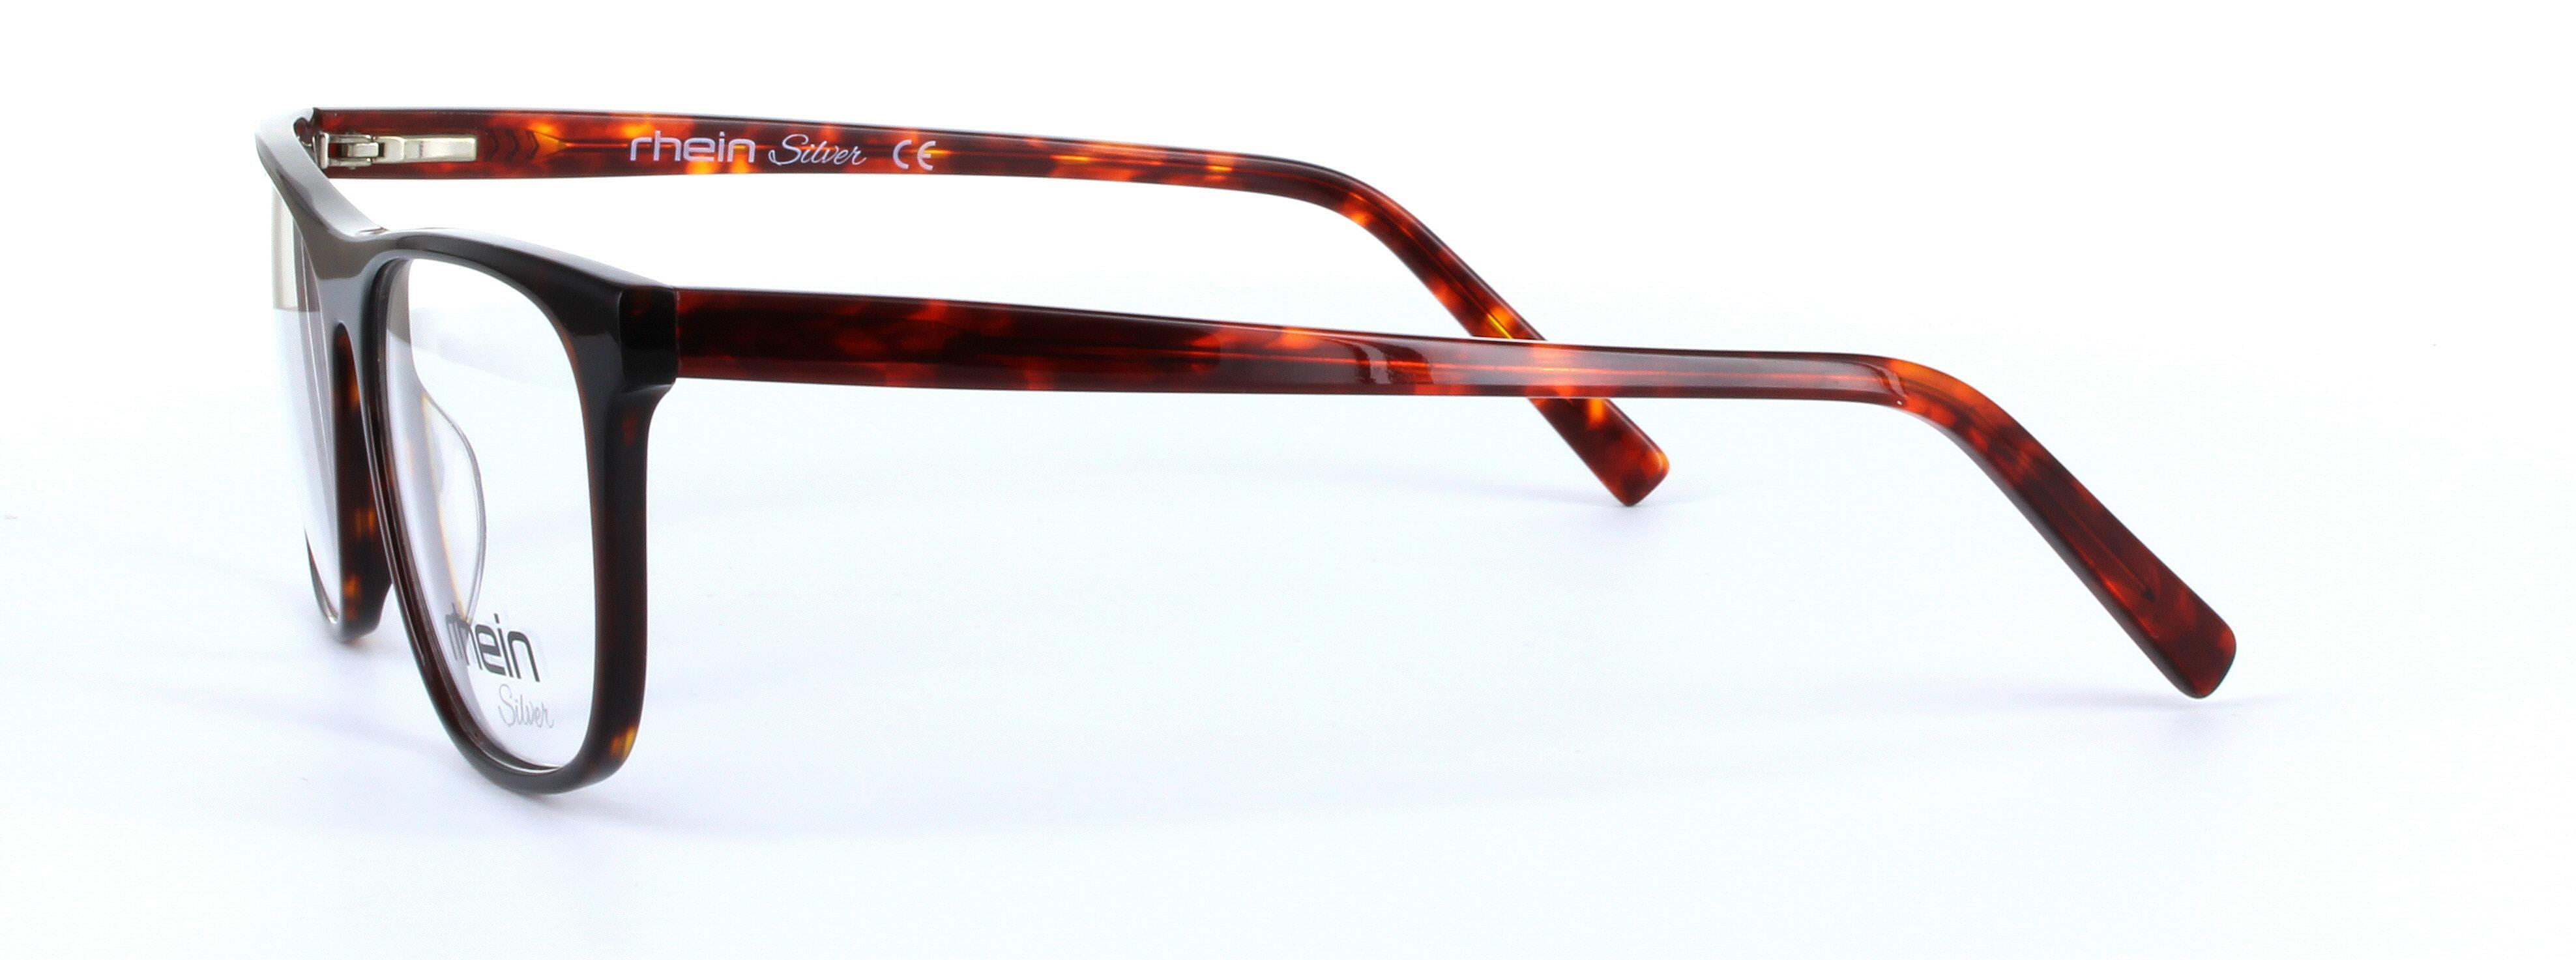 Cian Black and Tortoise Full Rim Rectangular Plastic Glasses - Image View 2